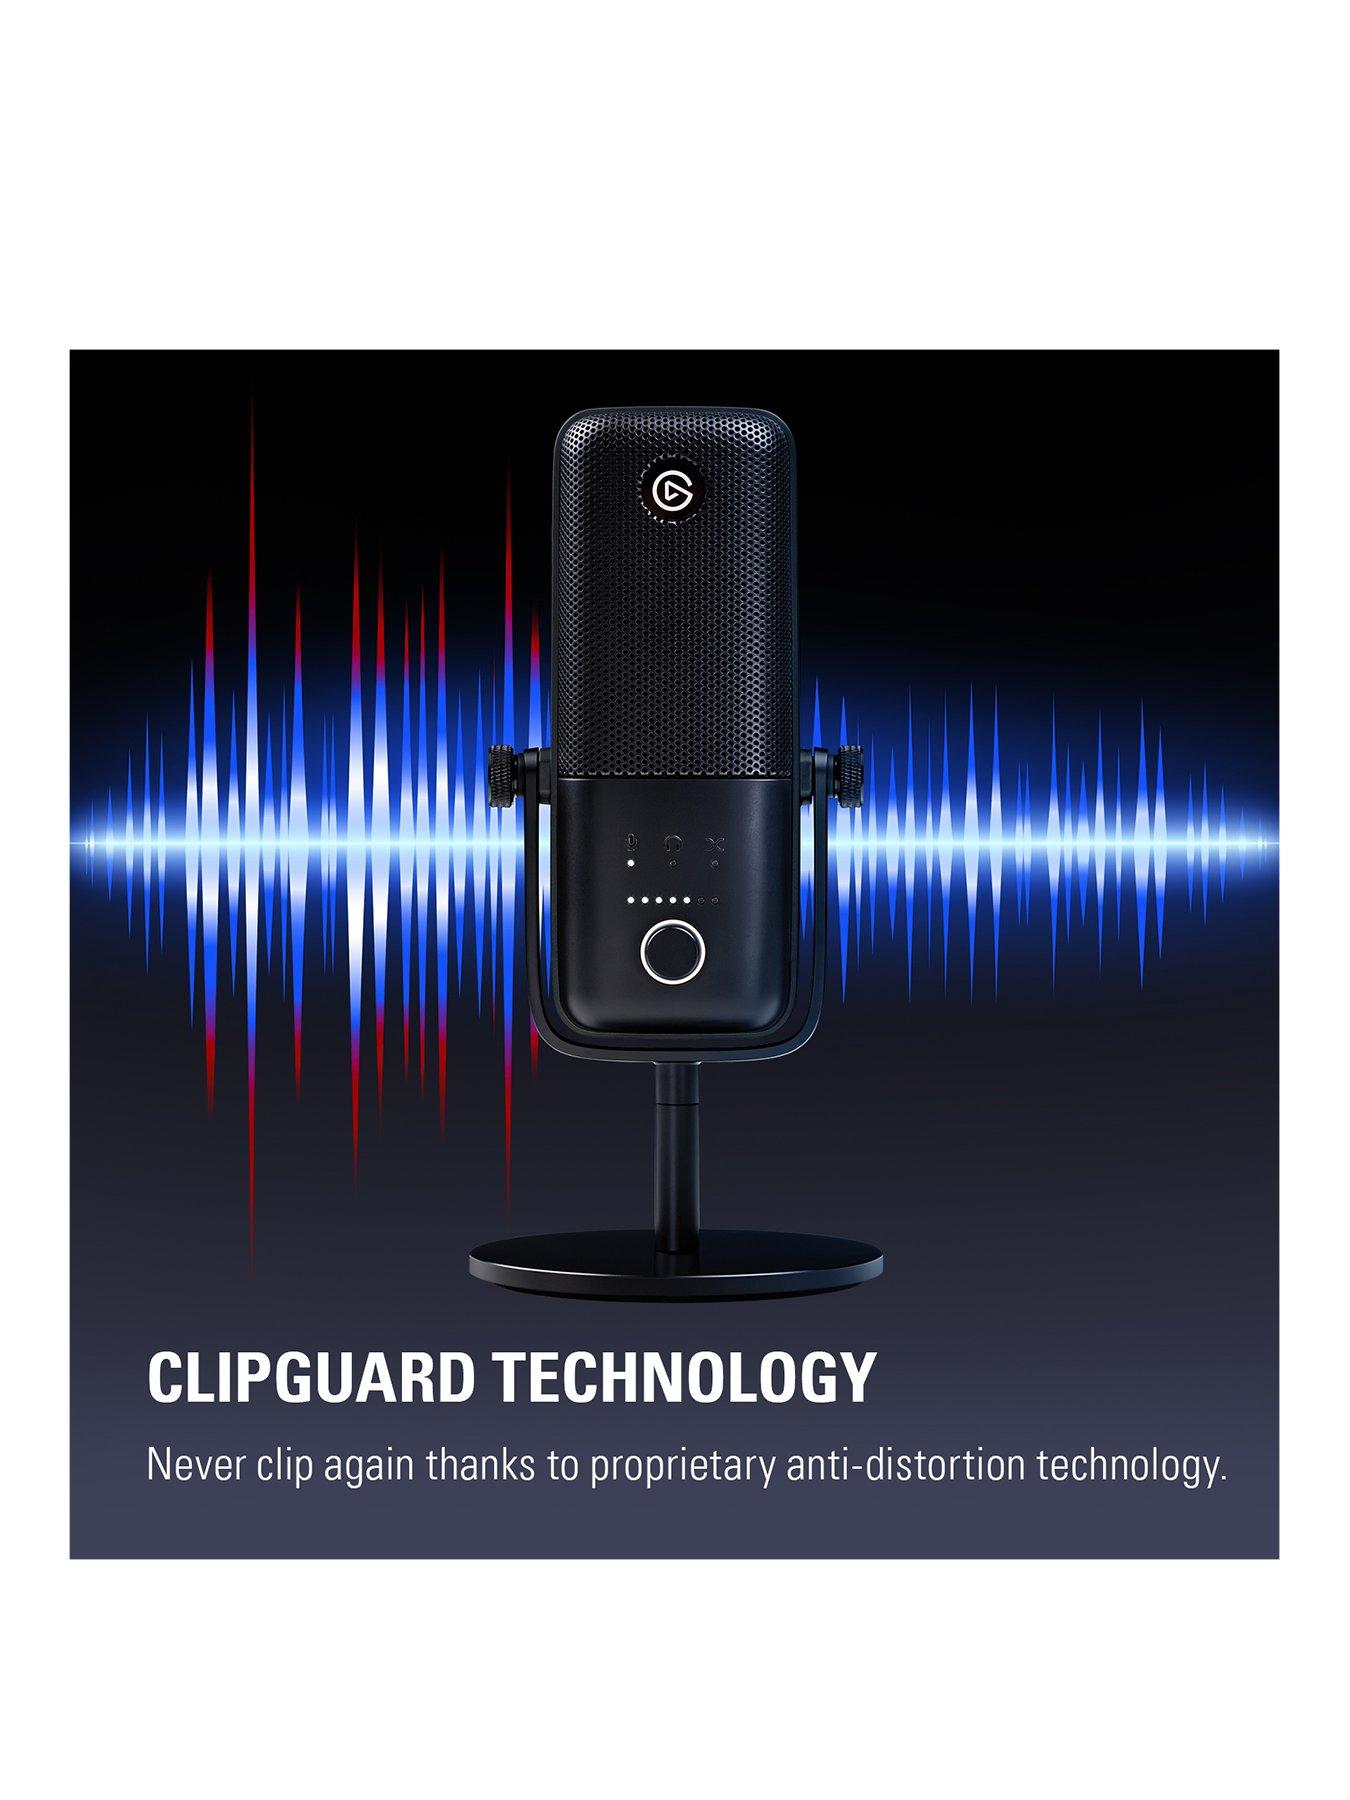  Elgato Wave:3 - USB Condenser Microphone and Digital